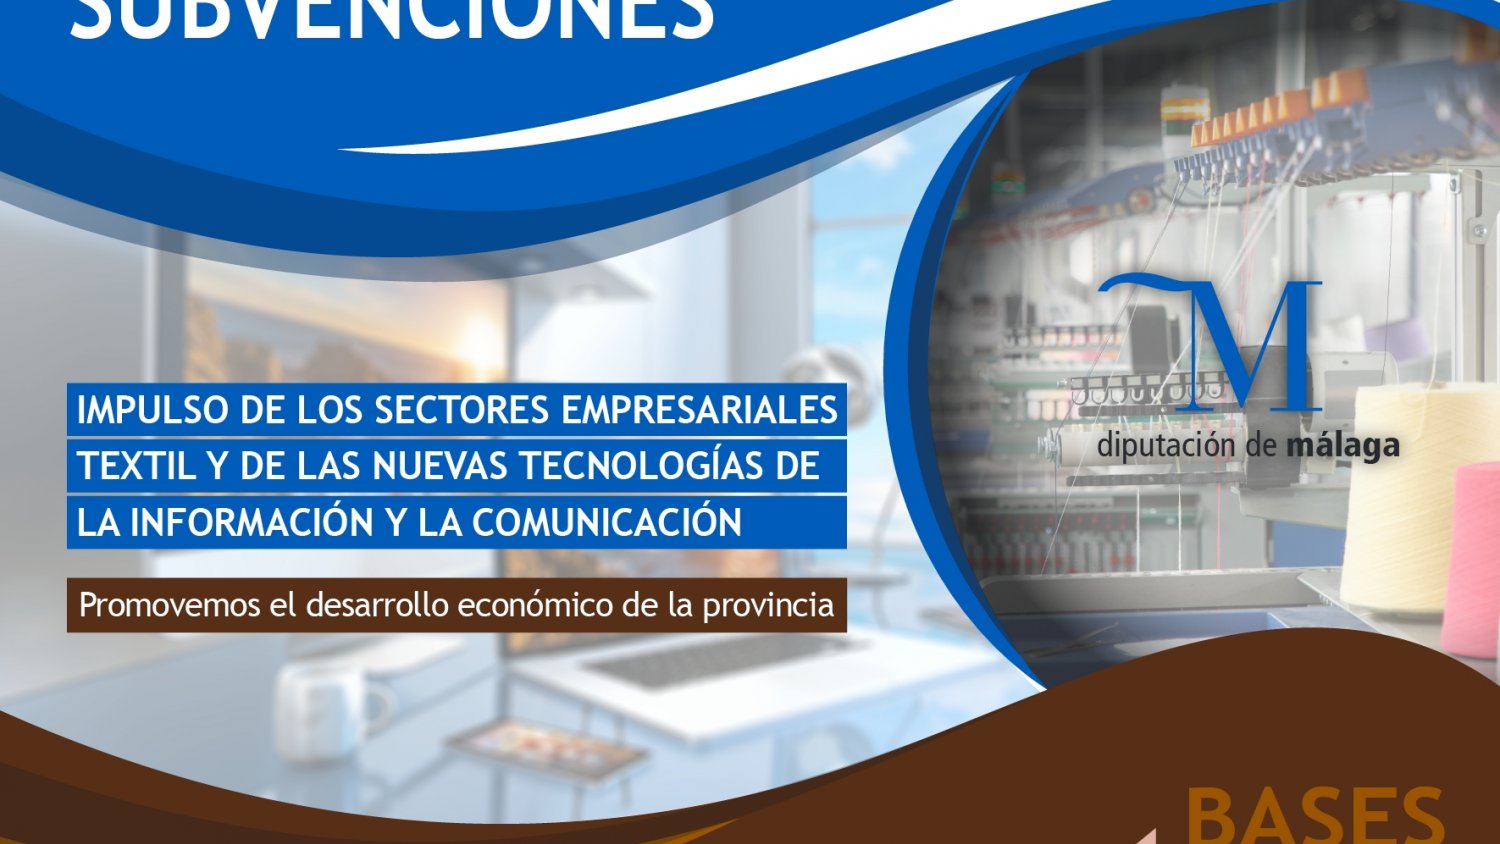 La Diputación publica las bases para solicitar ayudas económicas dirigidas a empresas textiles o de comunicación